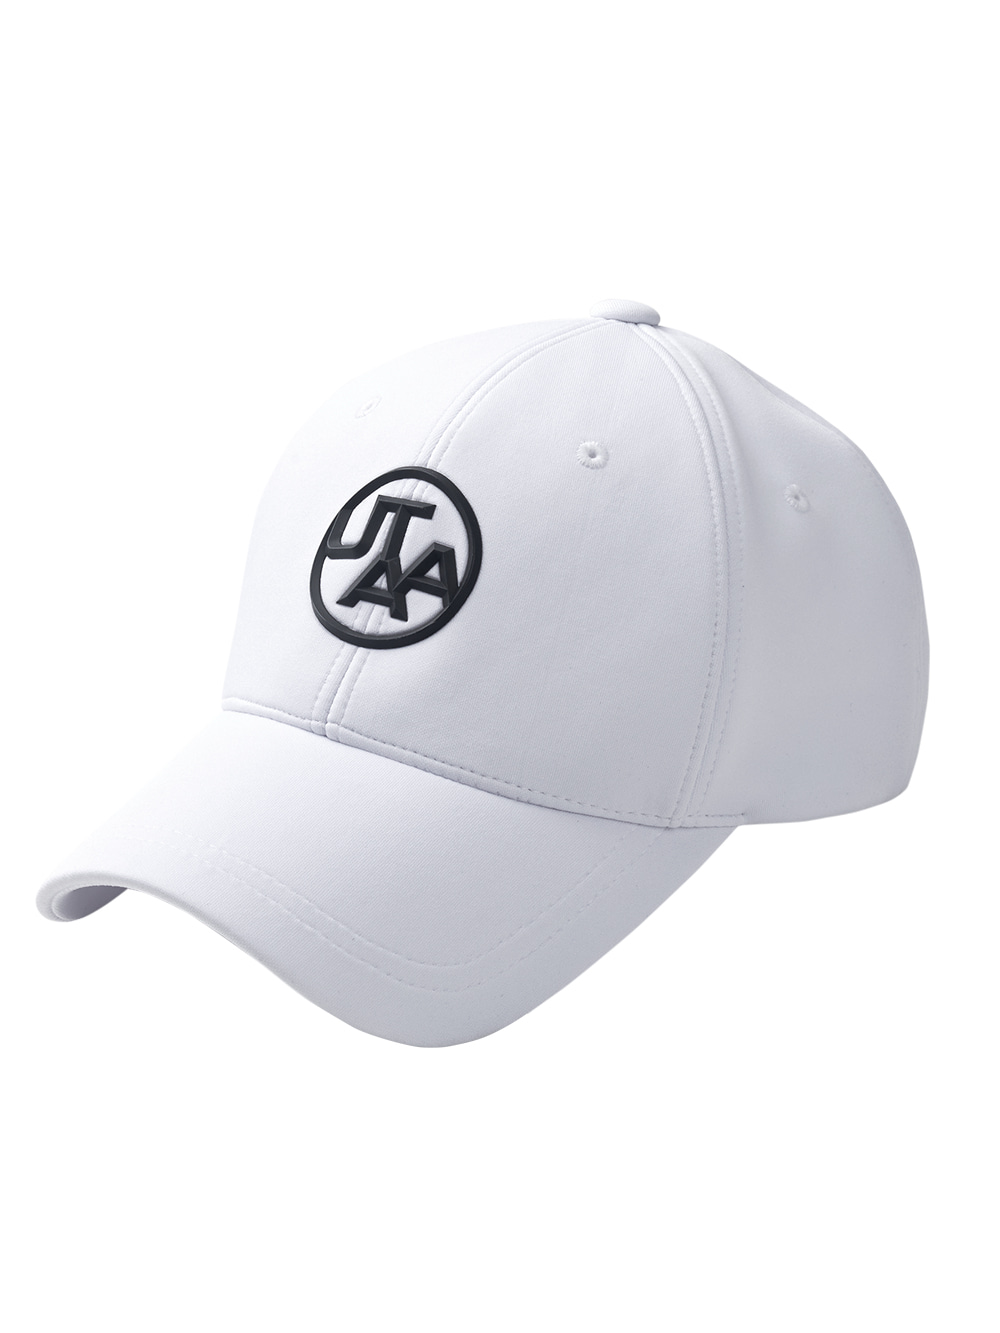 UTAA Figure Symbol Cushion Golf cap : White (UB0GCU530WH)